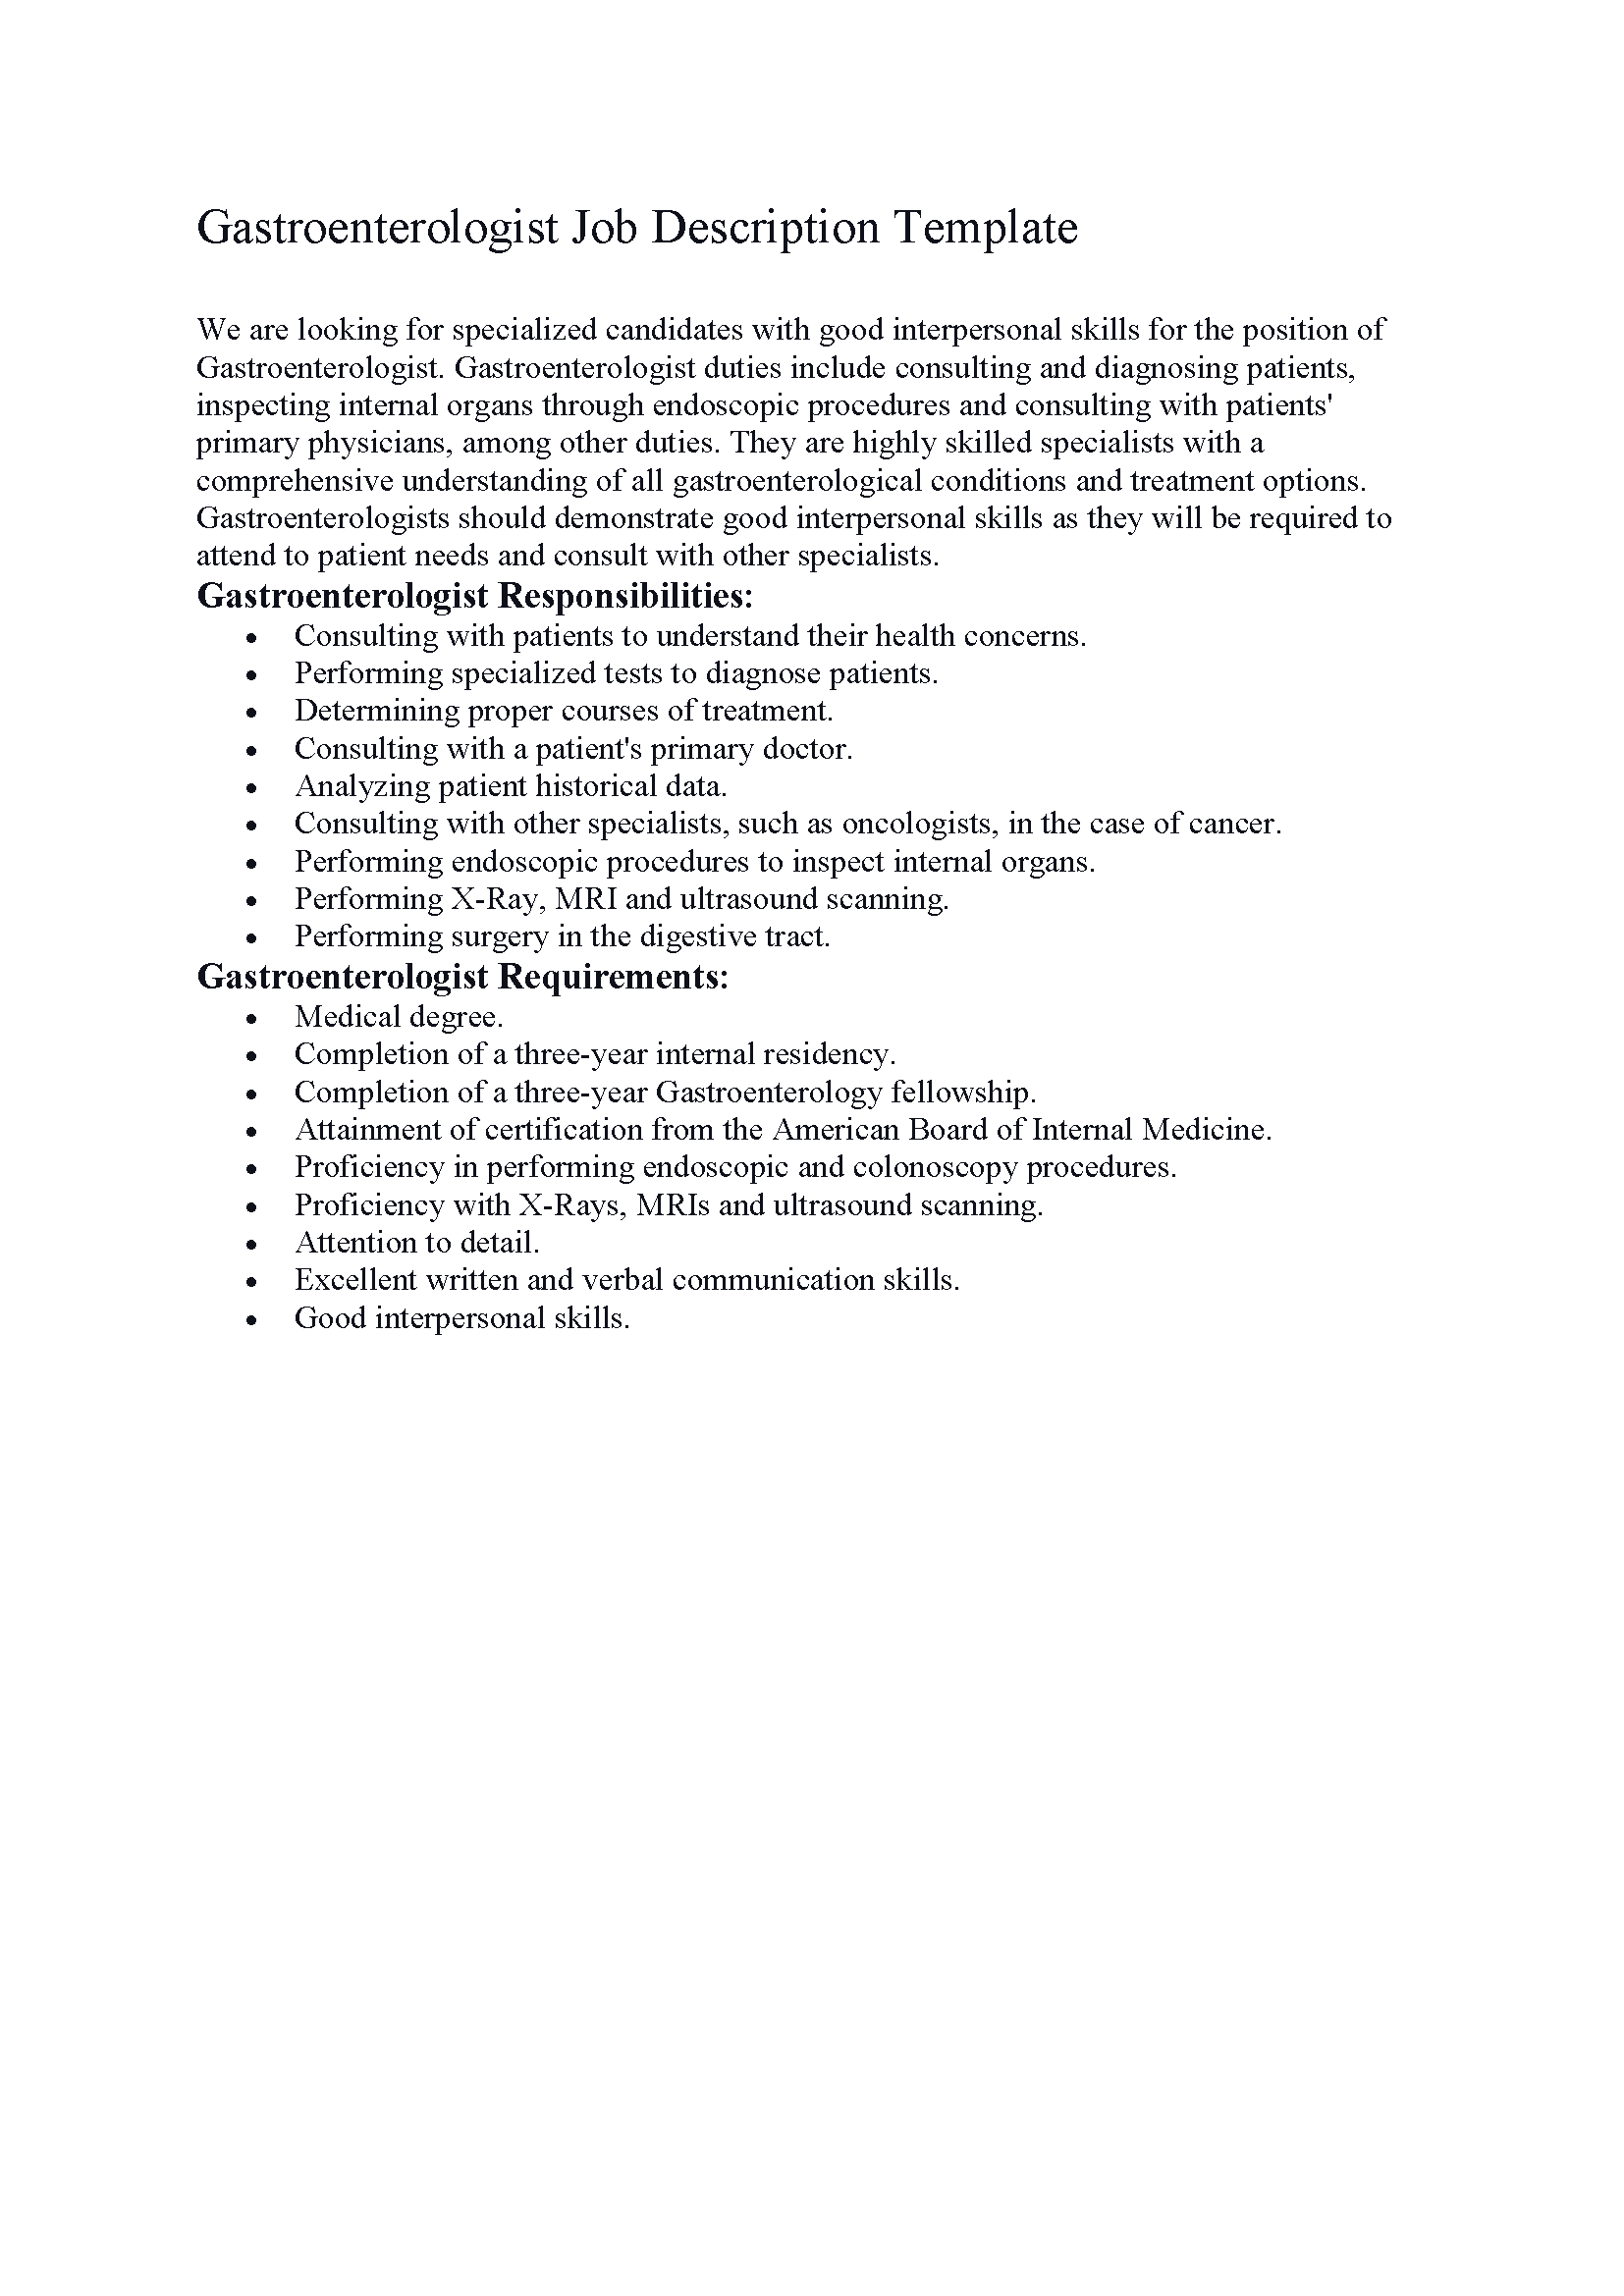 Gastroenterologist Job Description Template